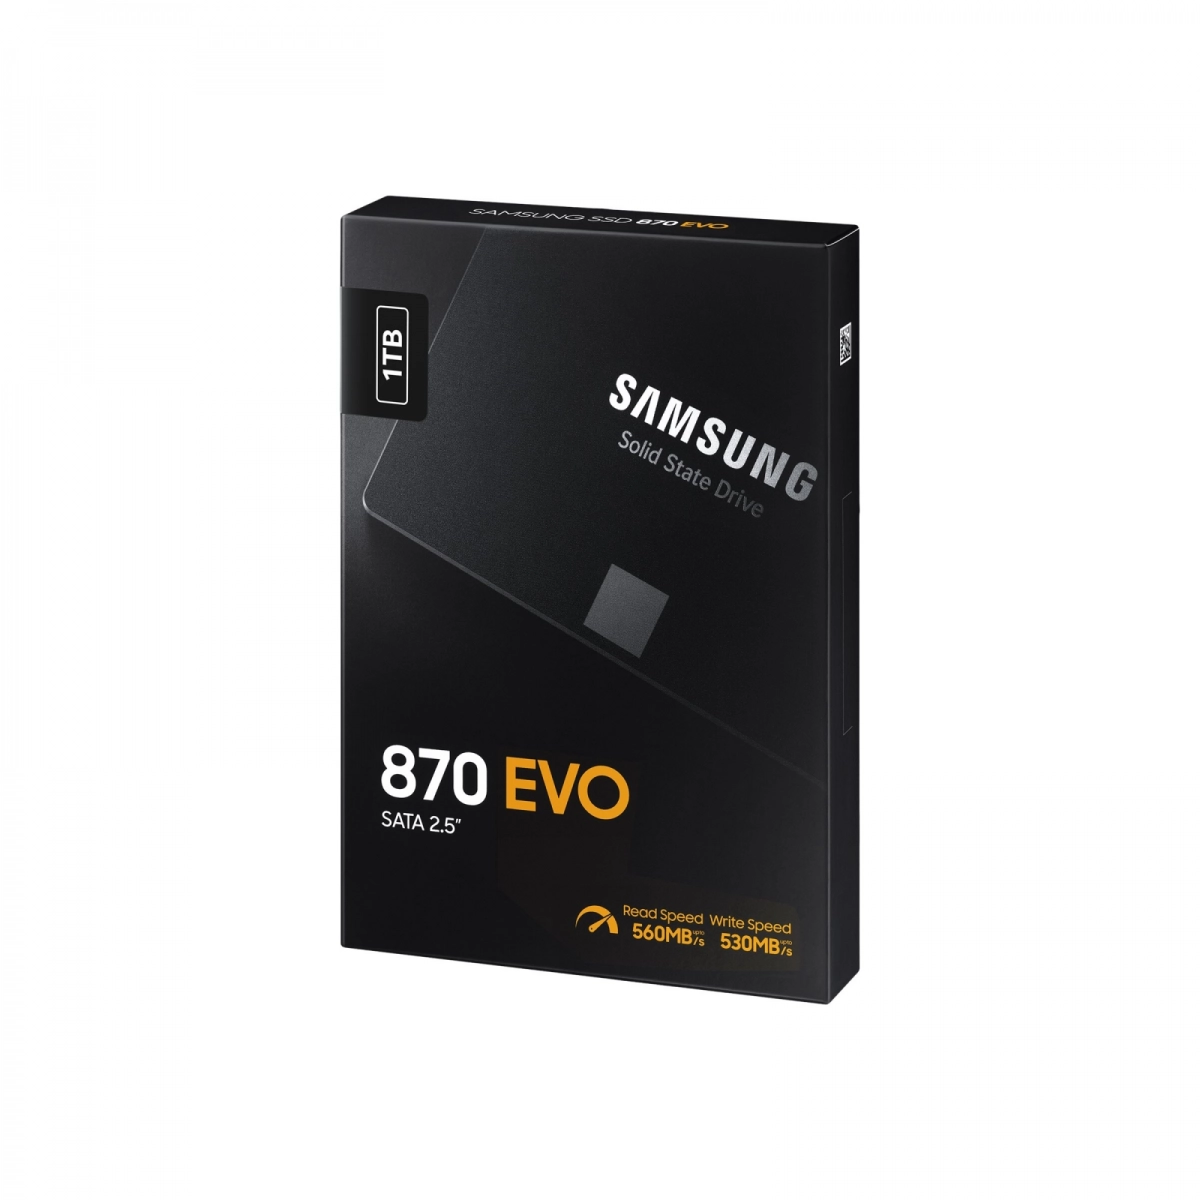 Notebook-Festplatte 1TB, SSD SATA3 für LENOVO ThinkPad X230 2306, 2320, 2324, 2325